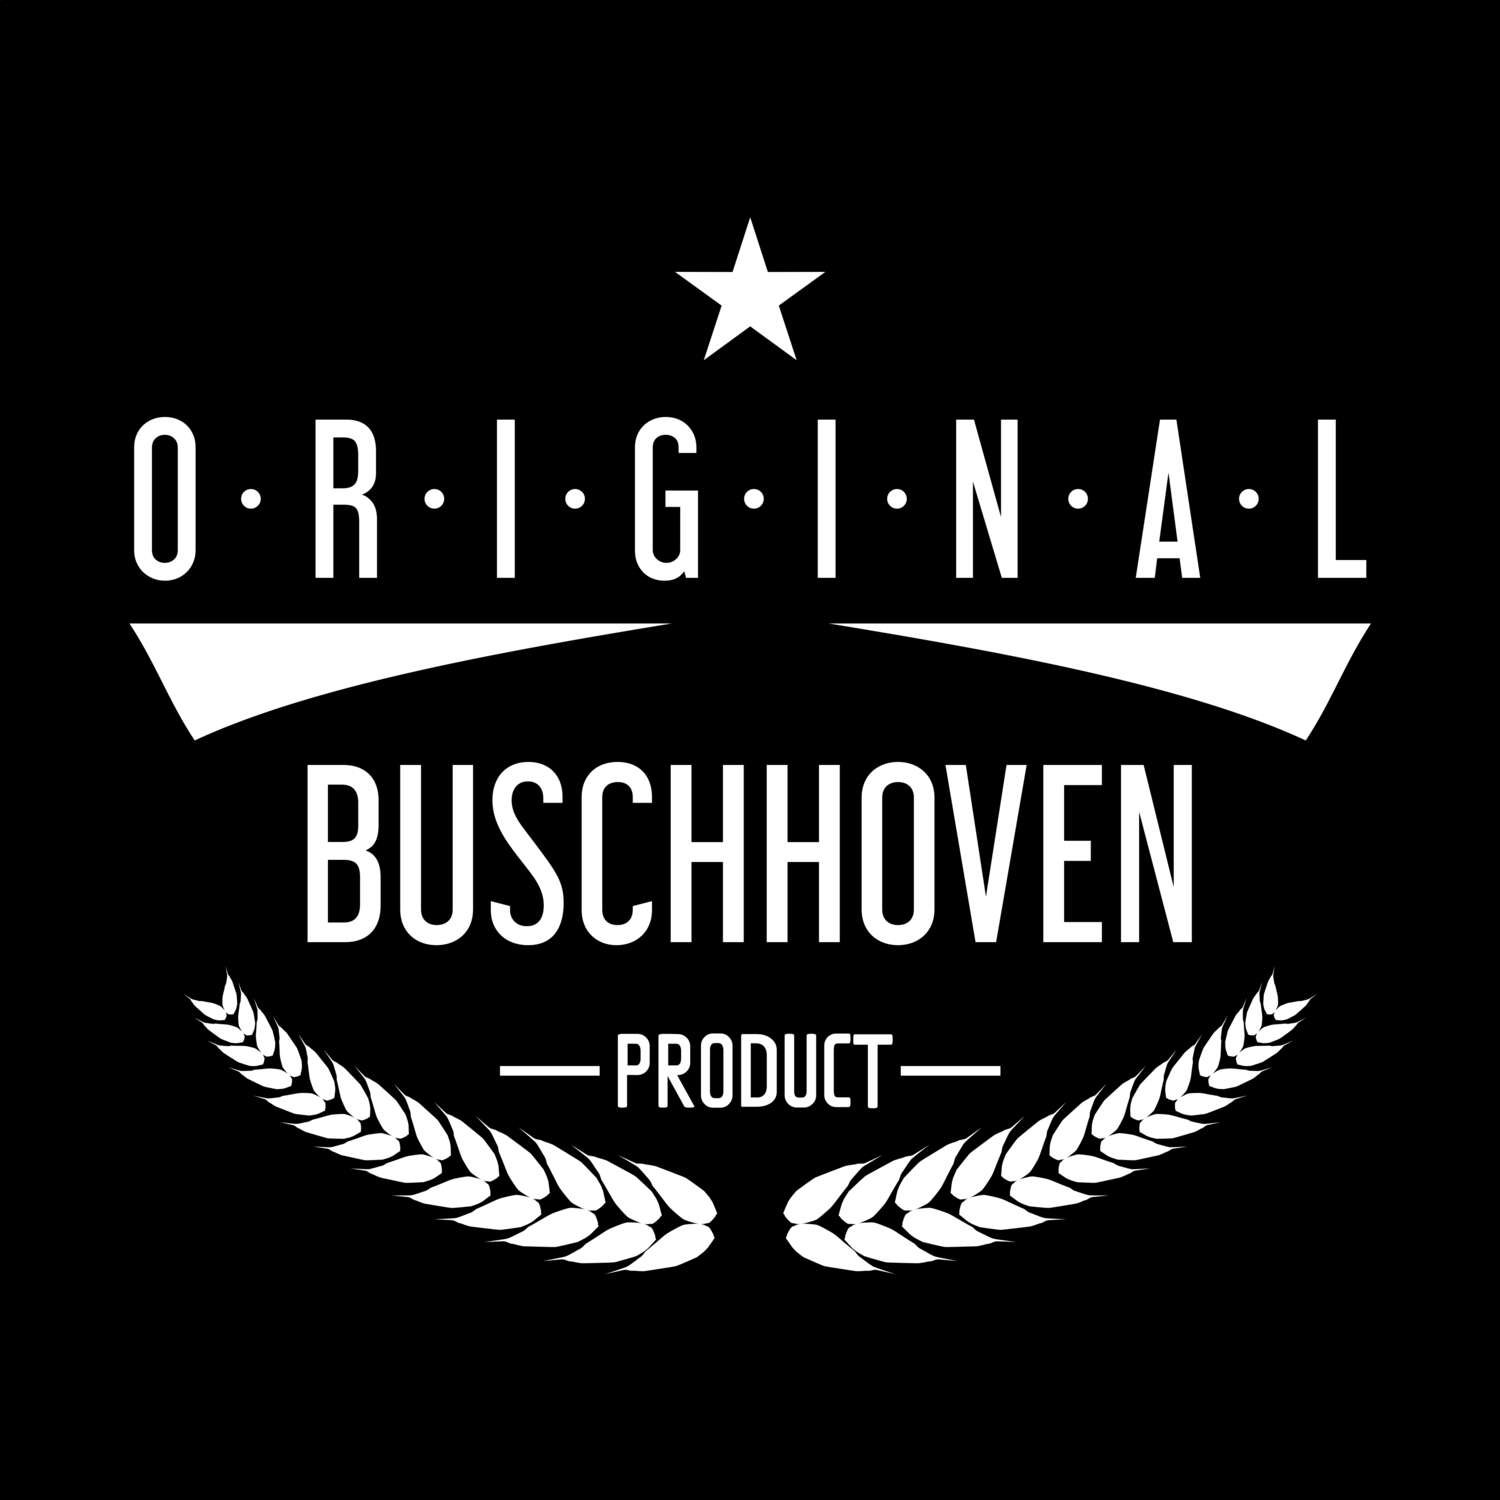 Buschhoven T-Shirt »Original Product«